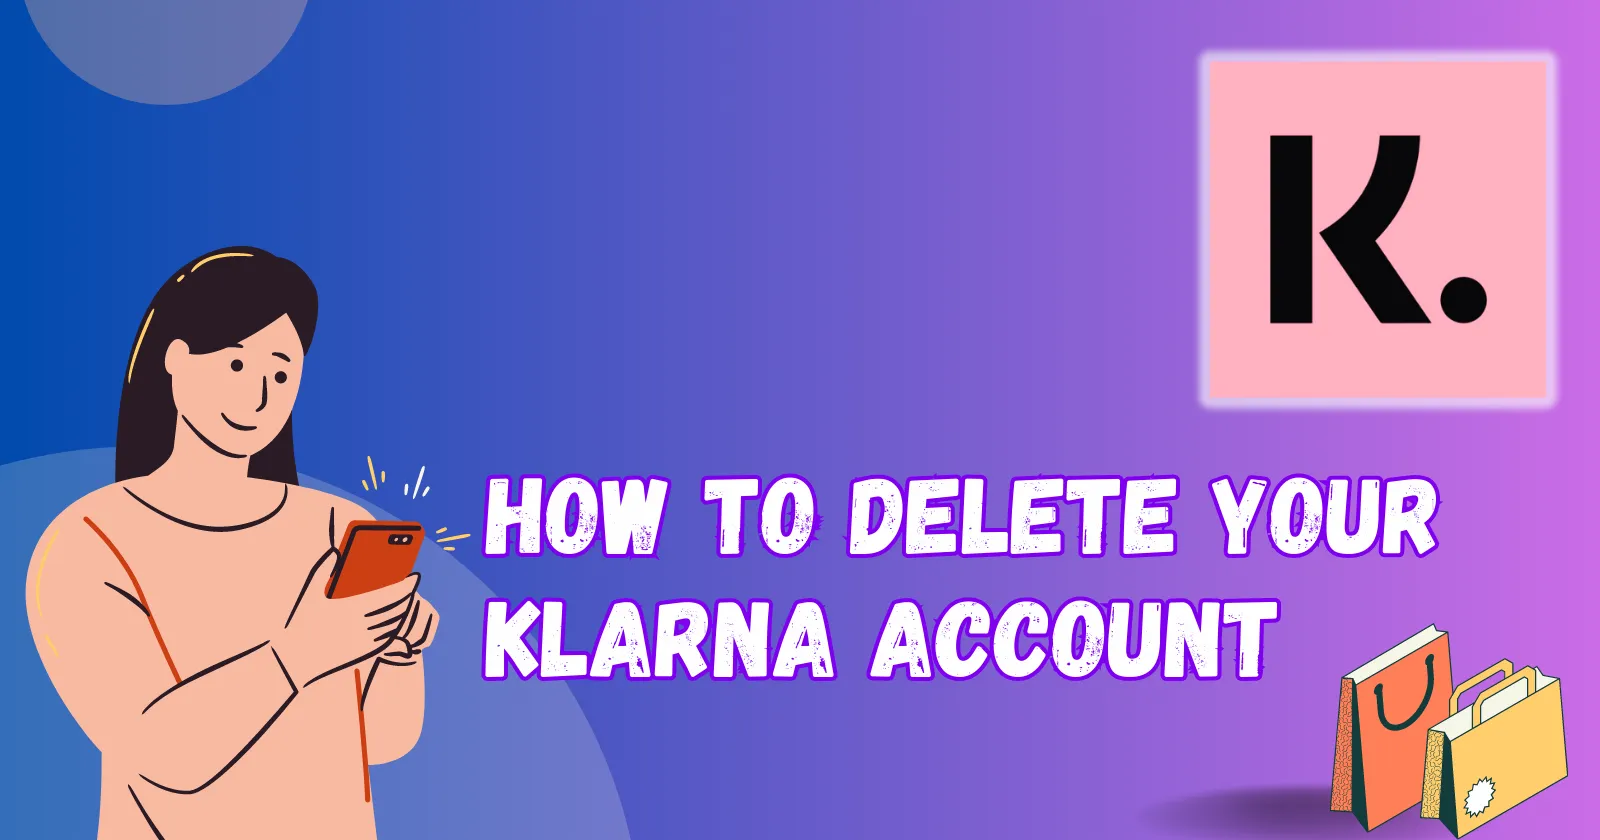 How to Delete Klarna Account Safely